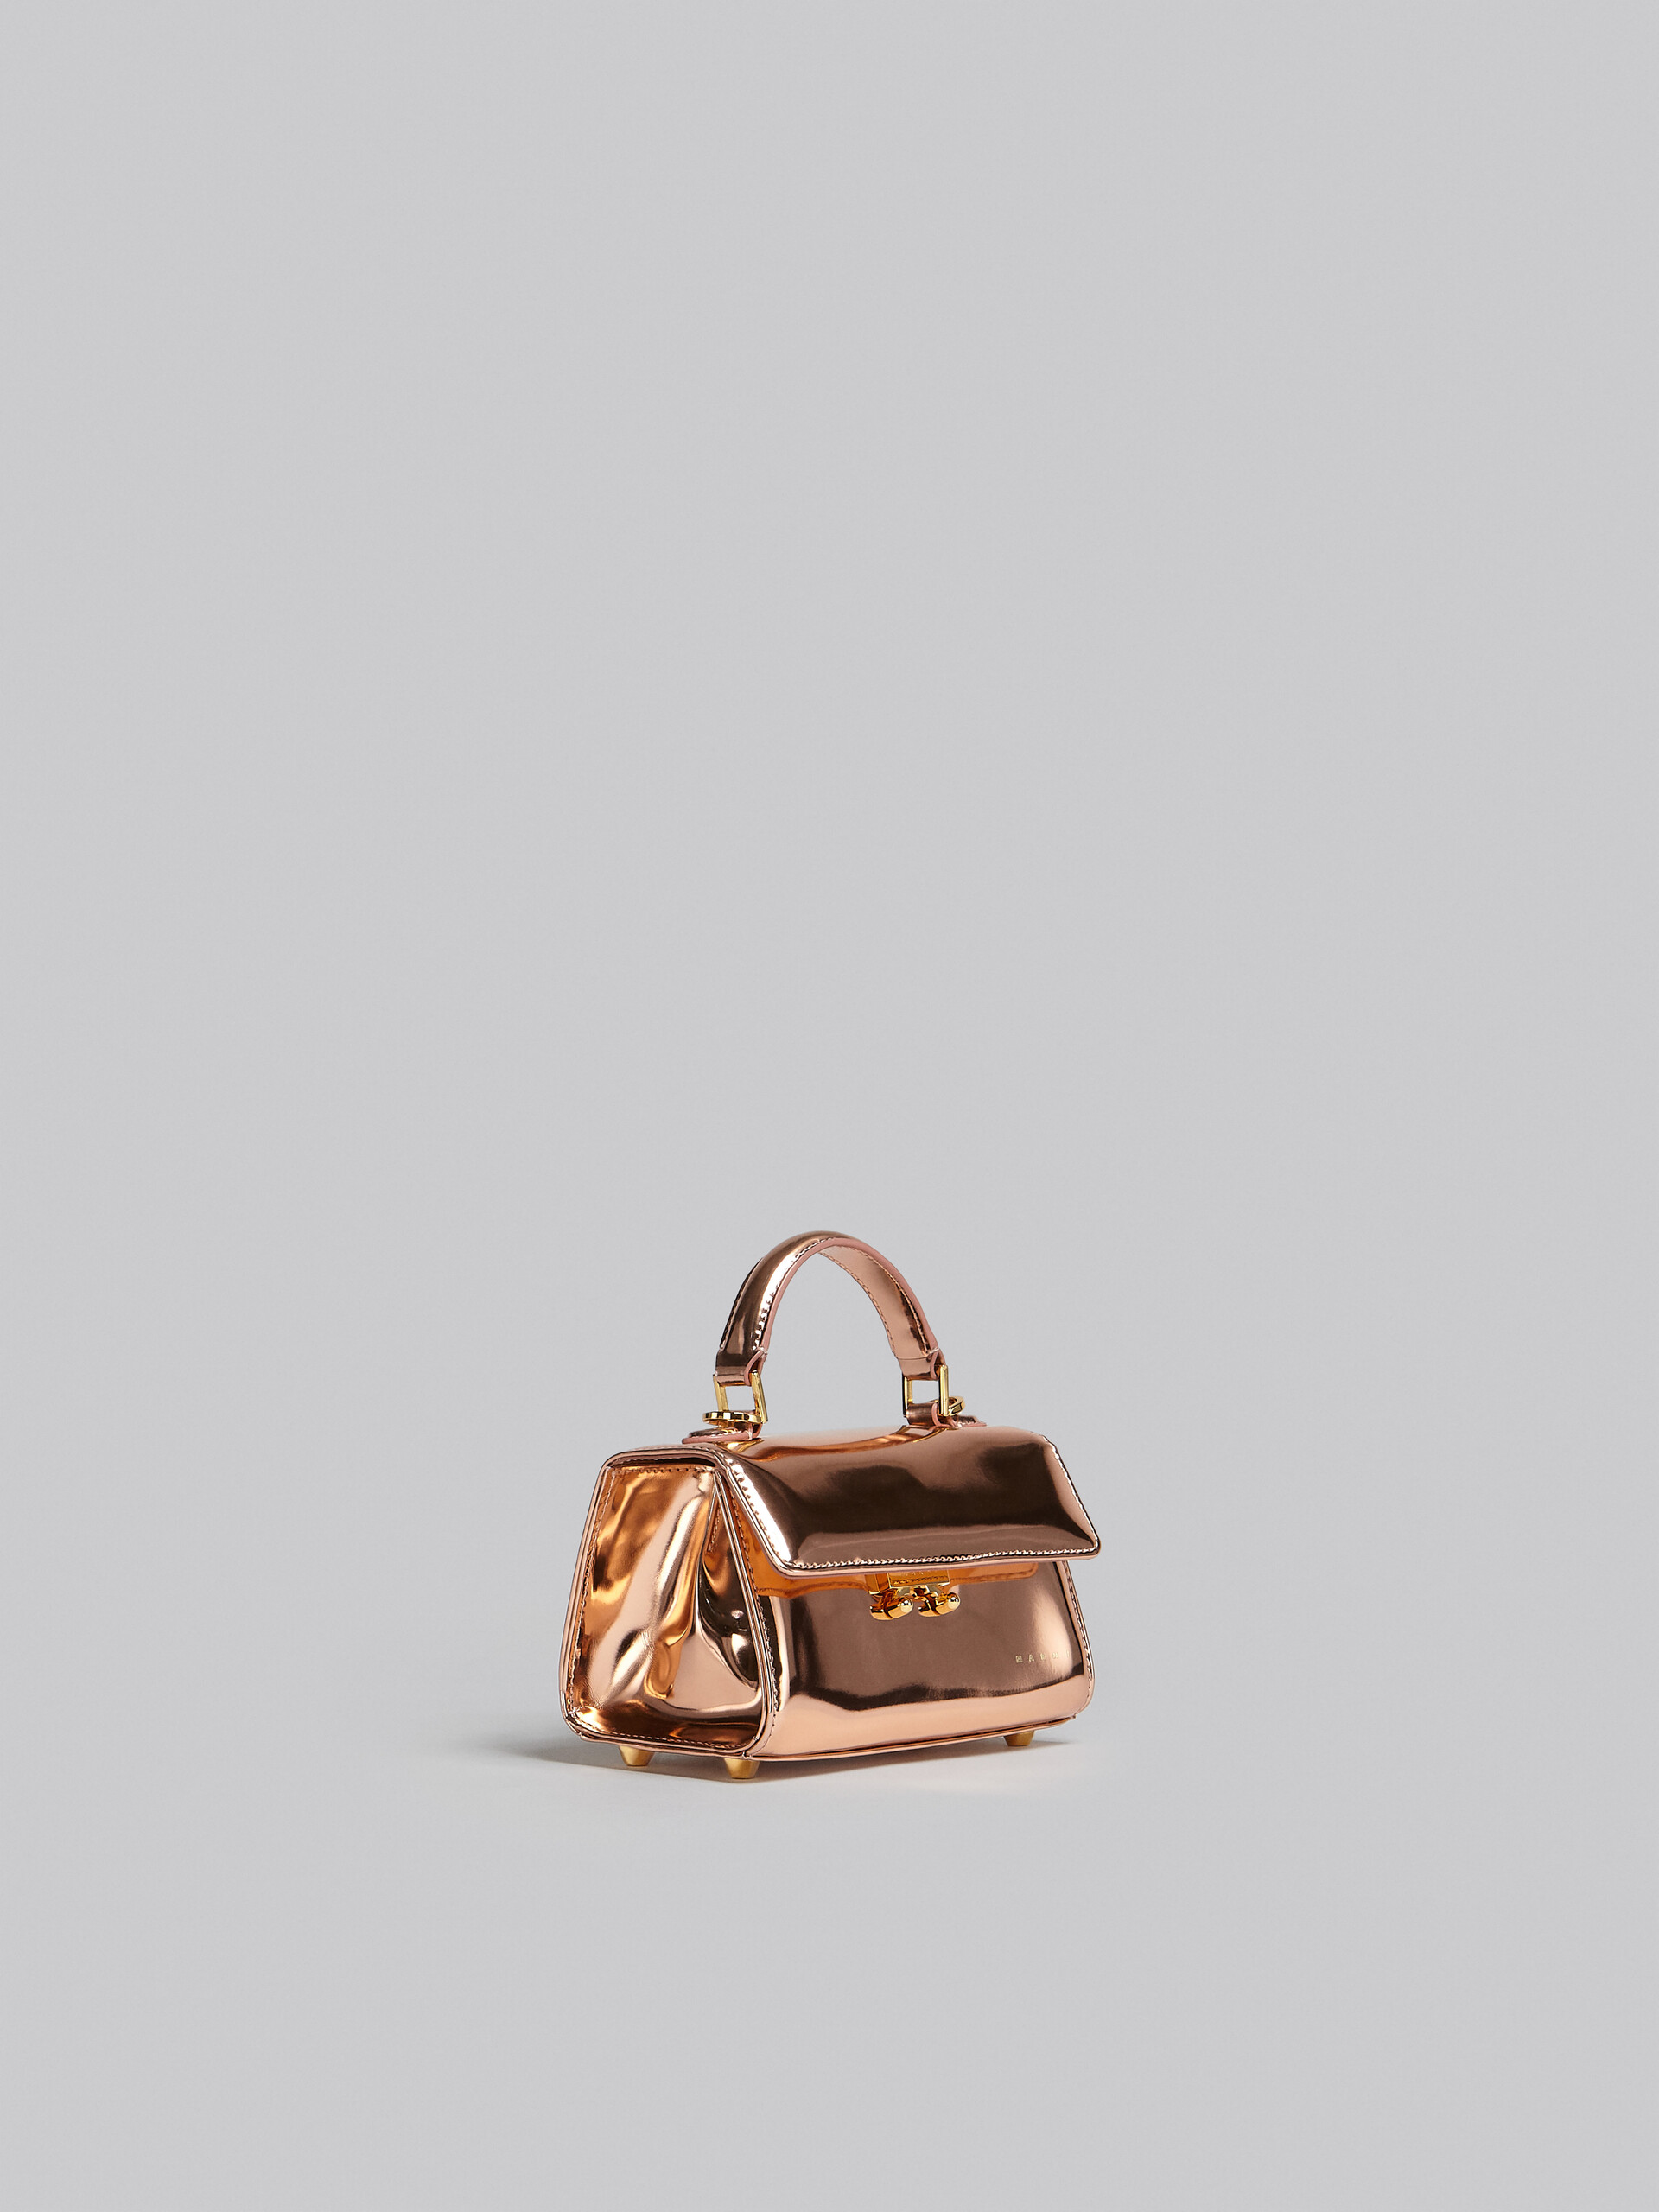 Relativity Mini Bag in pink mirrored leather - Handbag - Image 5